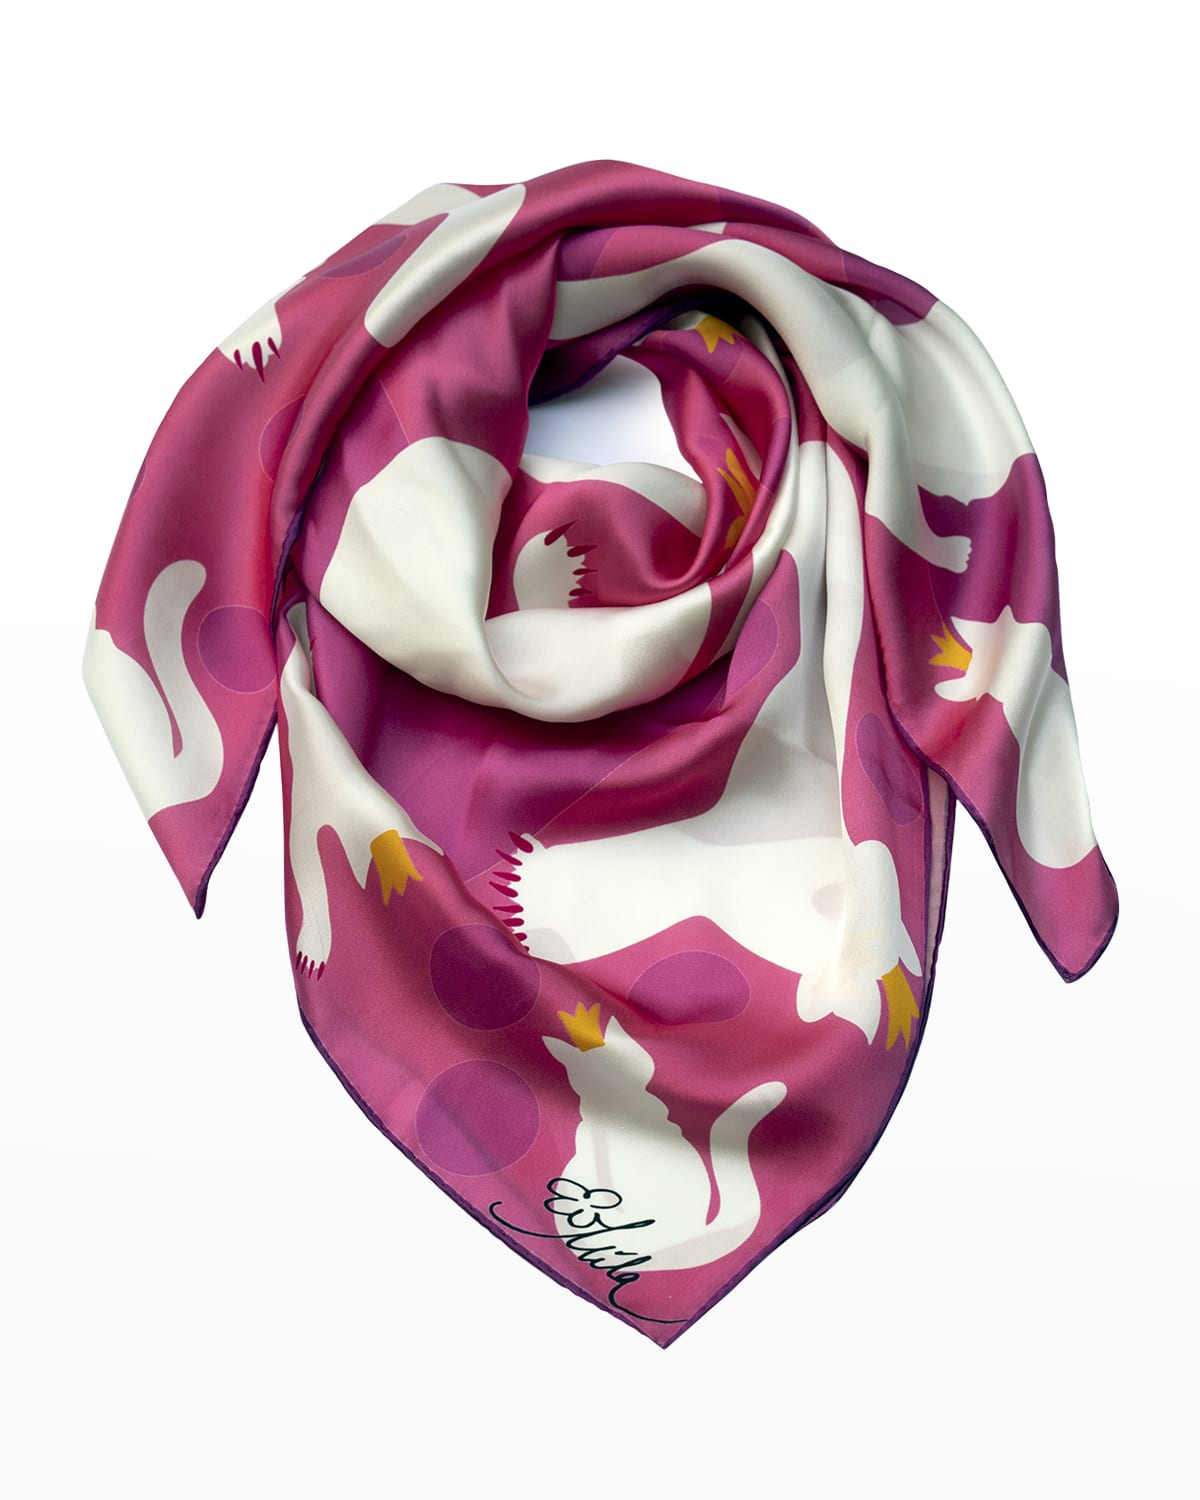 purple silk sheer batik scarf women's scarf long neck scarf light weight silk scarf hand painted large scarf purple & black scarf